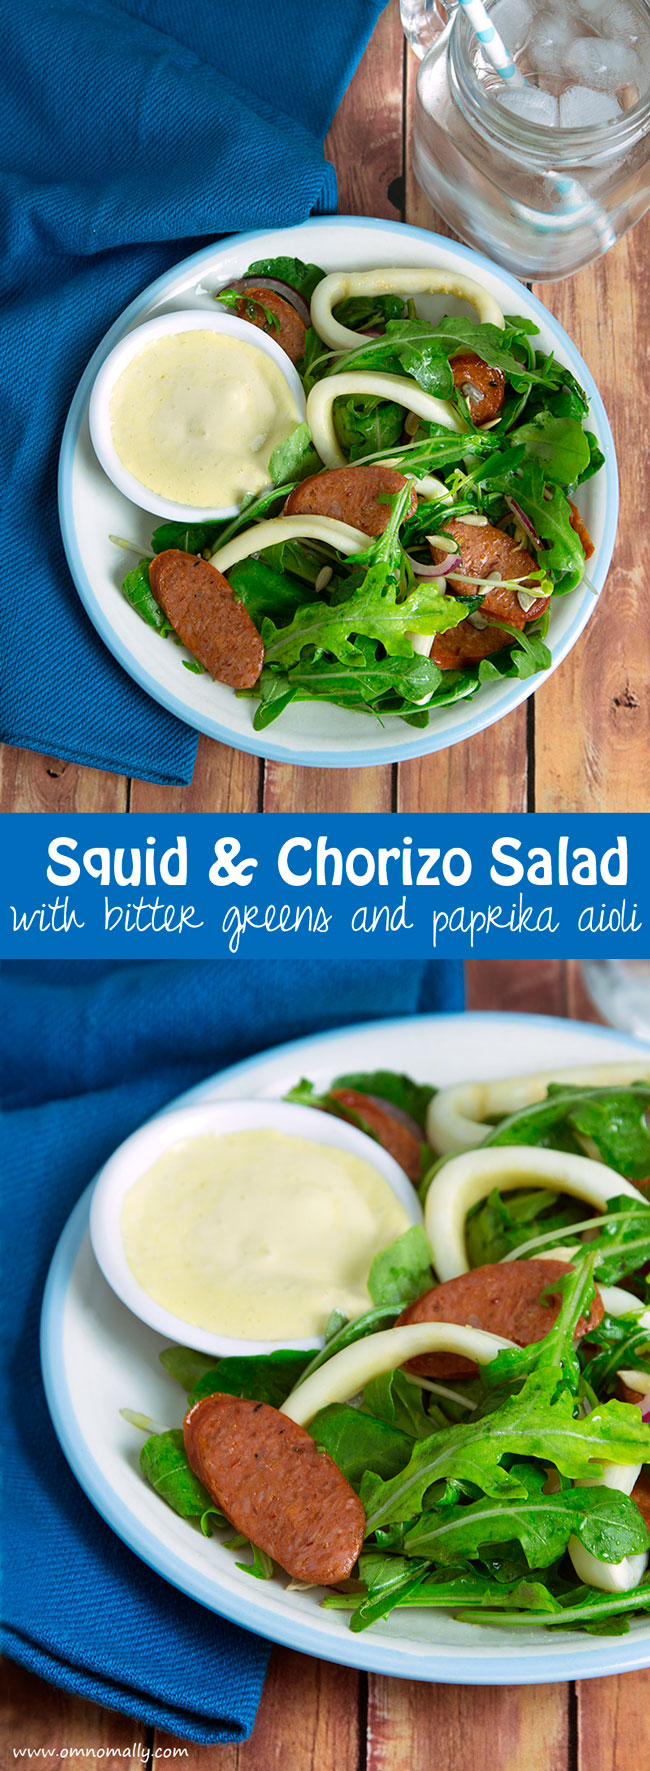 Squid-&-Chorizo-Salad-with-Bitter-Greens-and-Paprika-Aioli